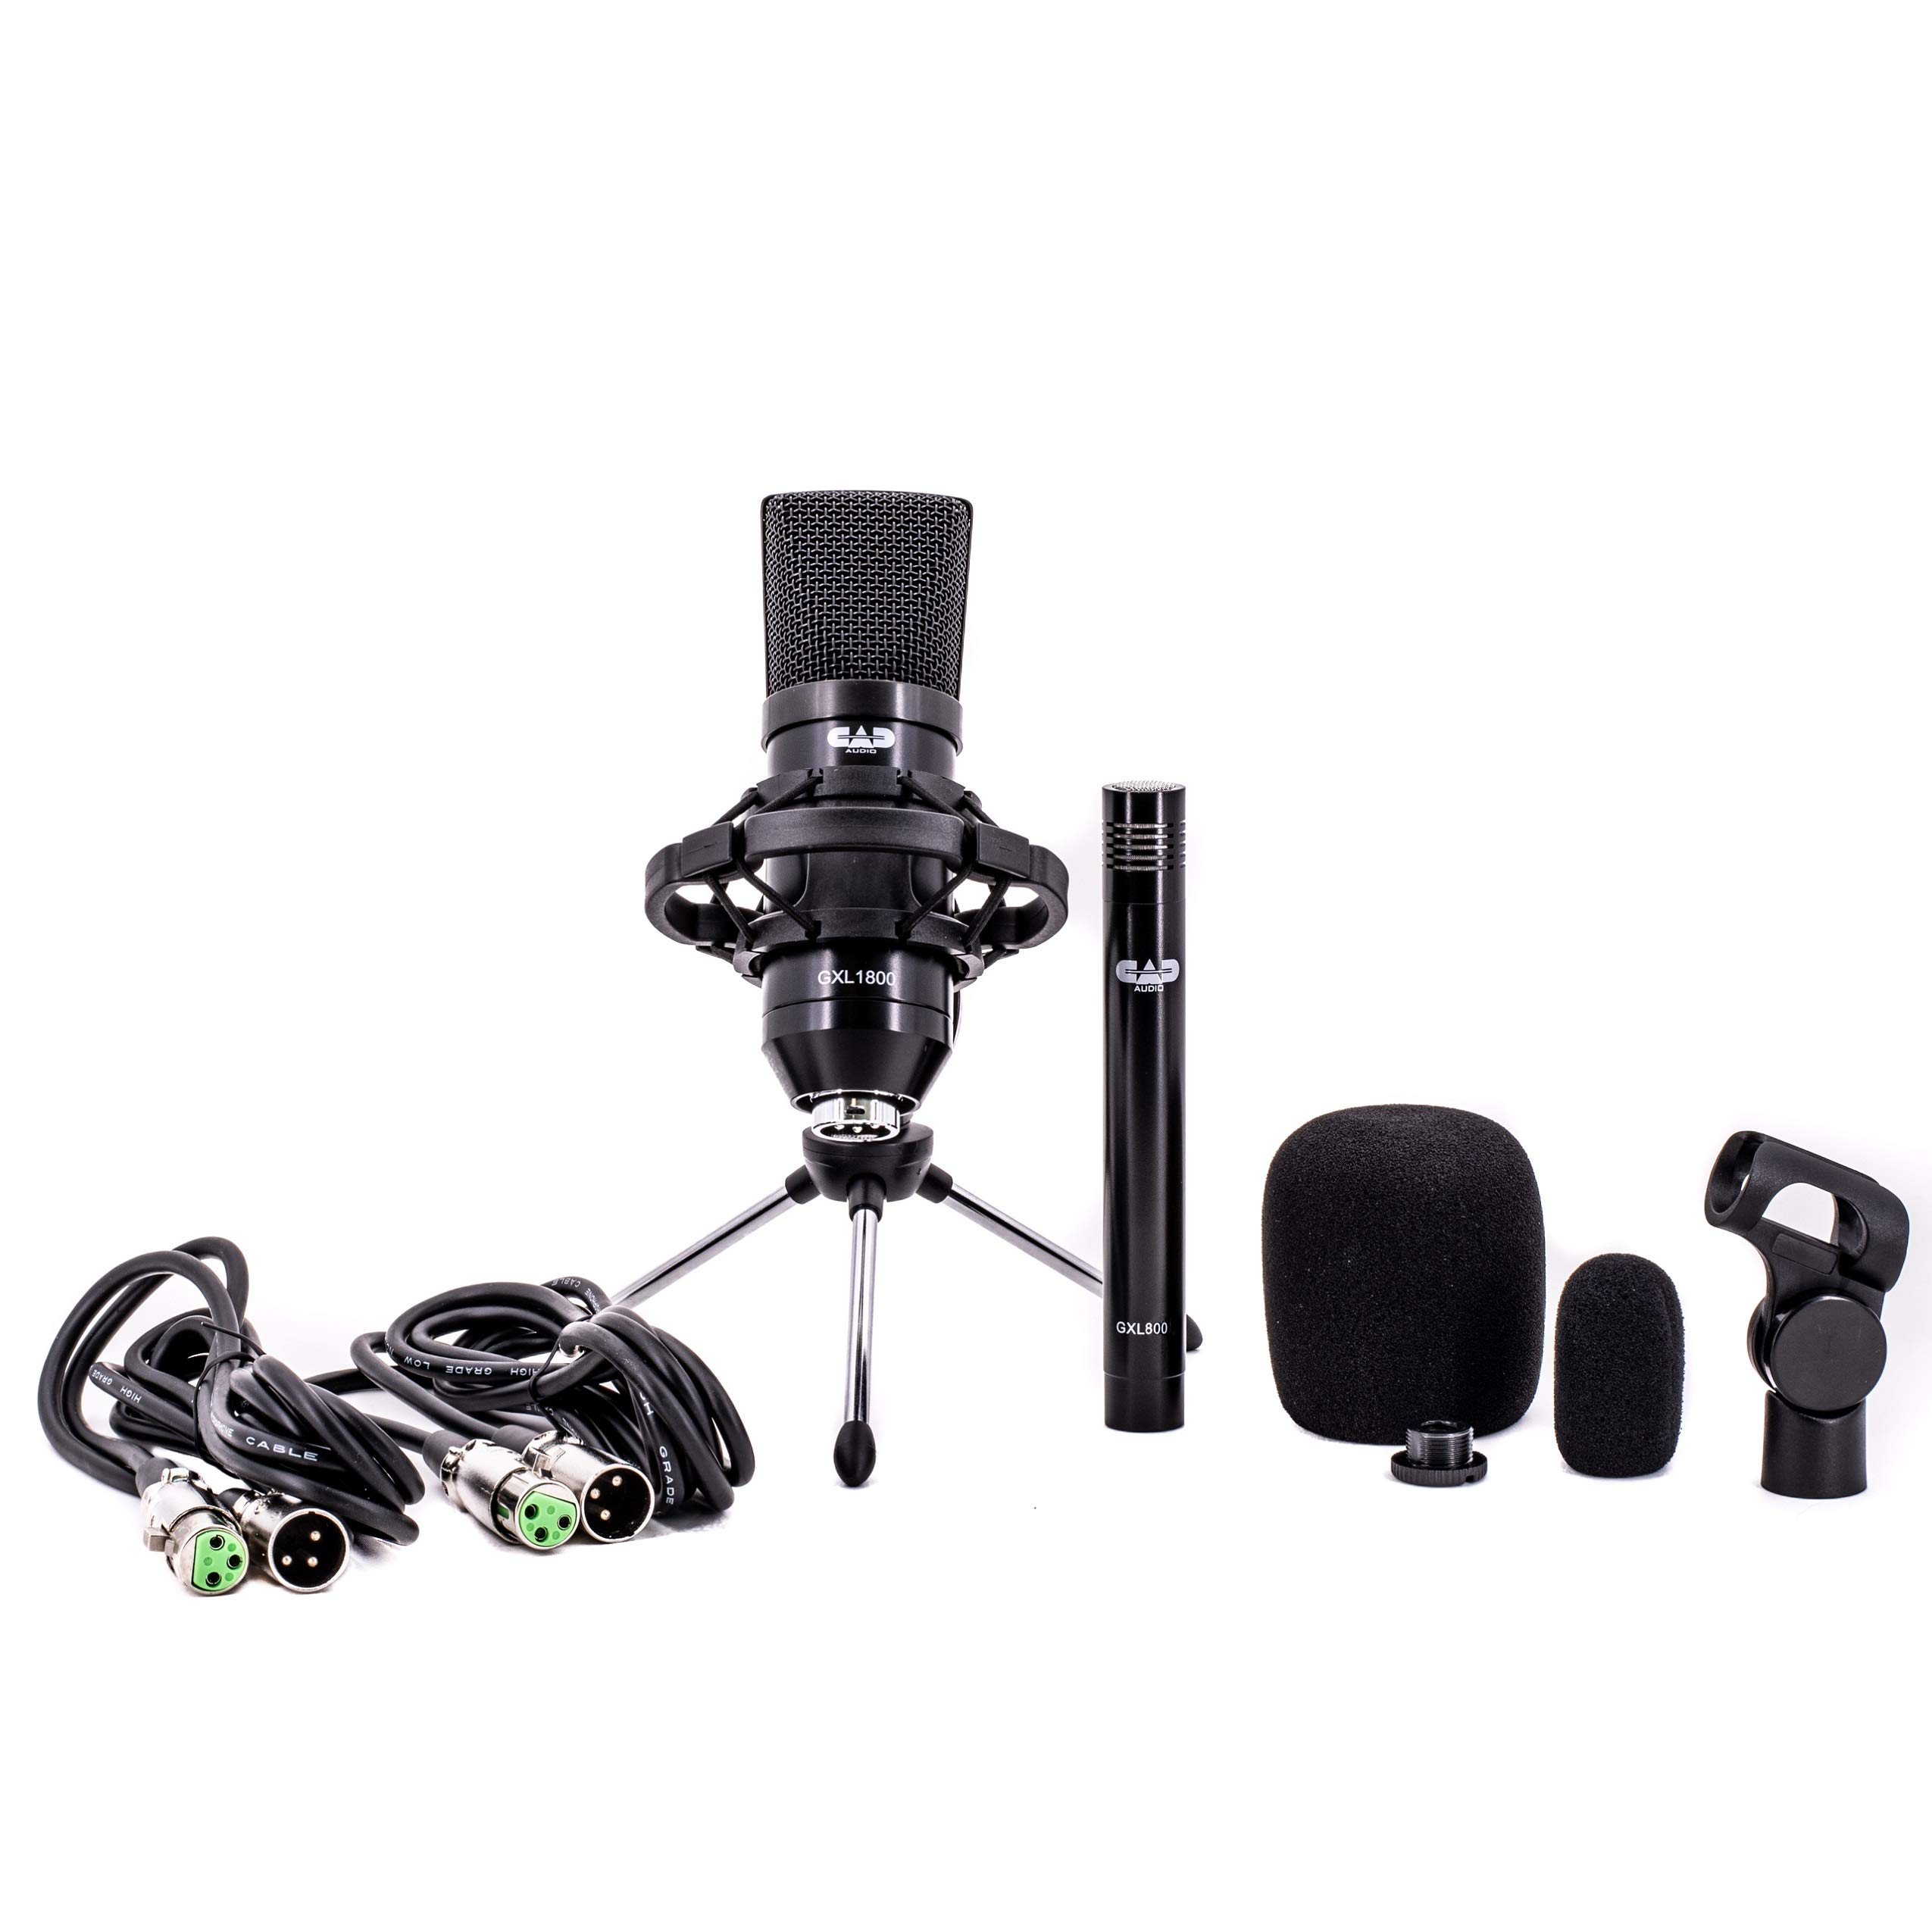 CAD GXL1800 & GXL800 Mikrofon-Set – perfekt für Studio, Podcasting & Streaming